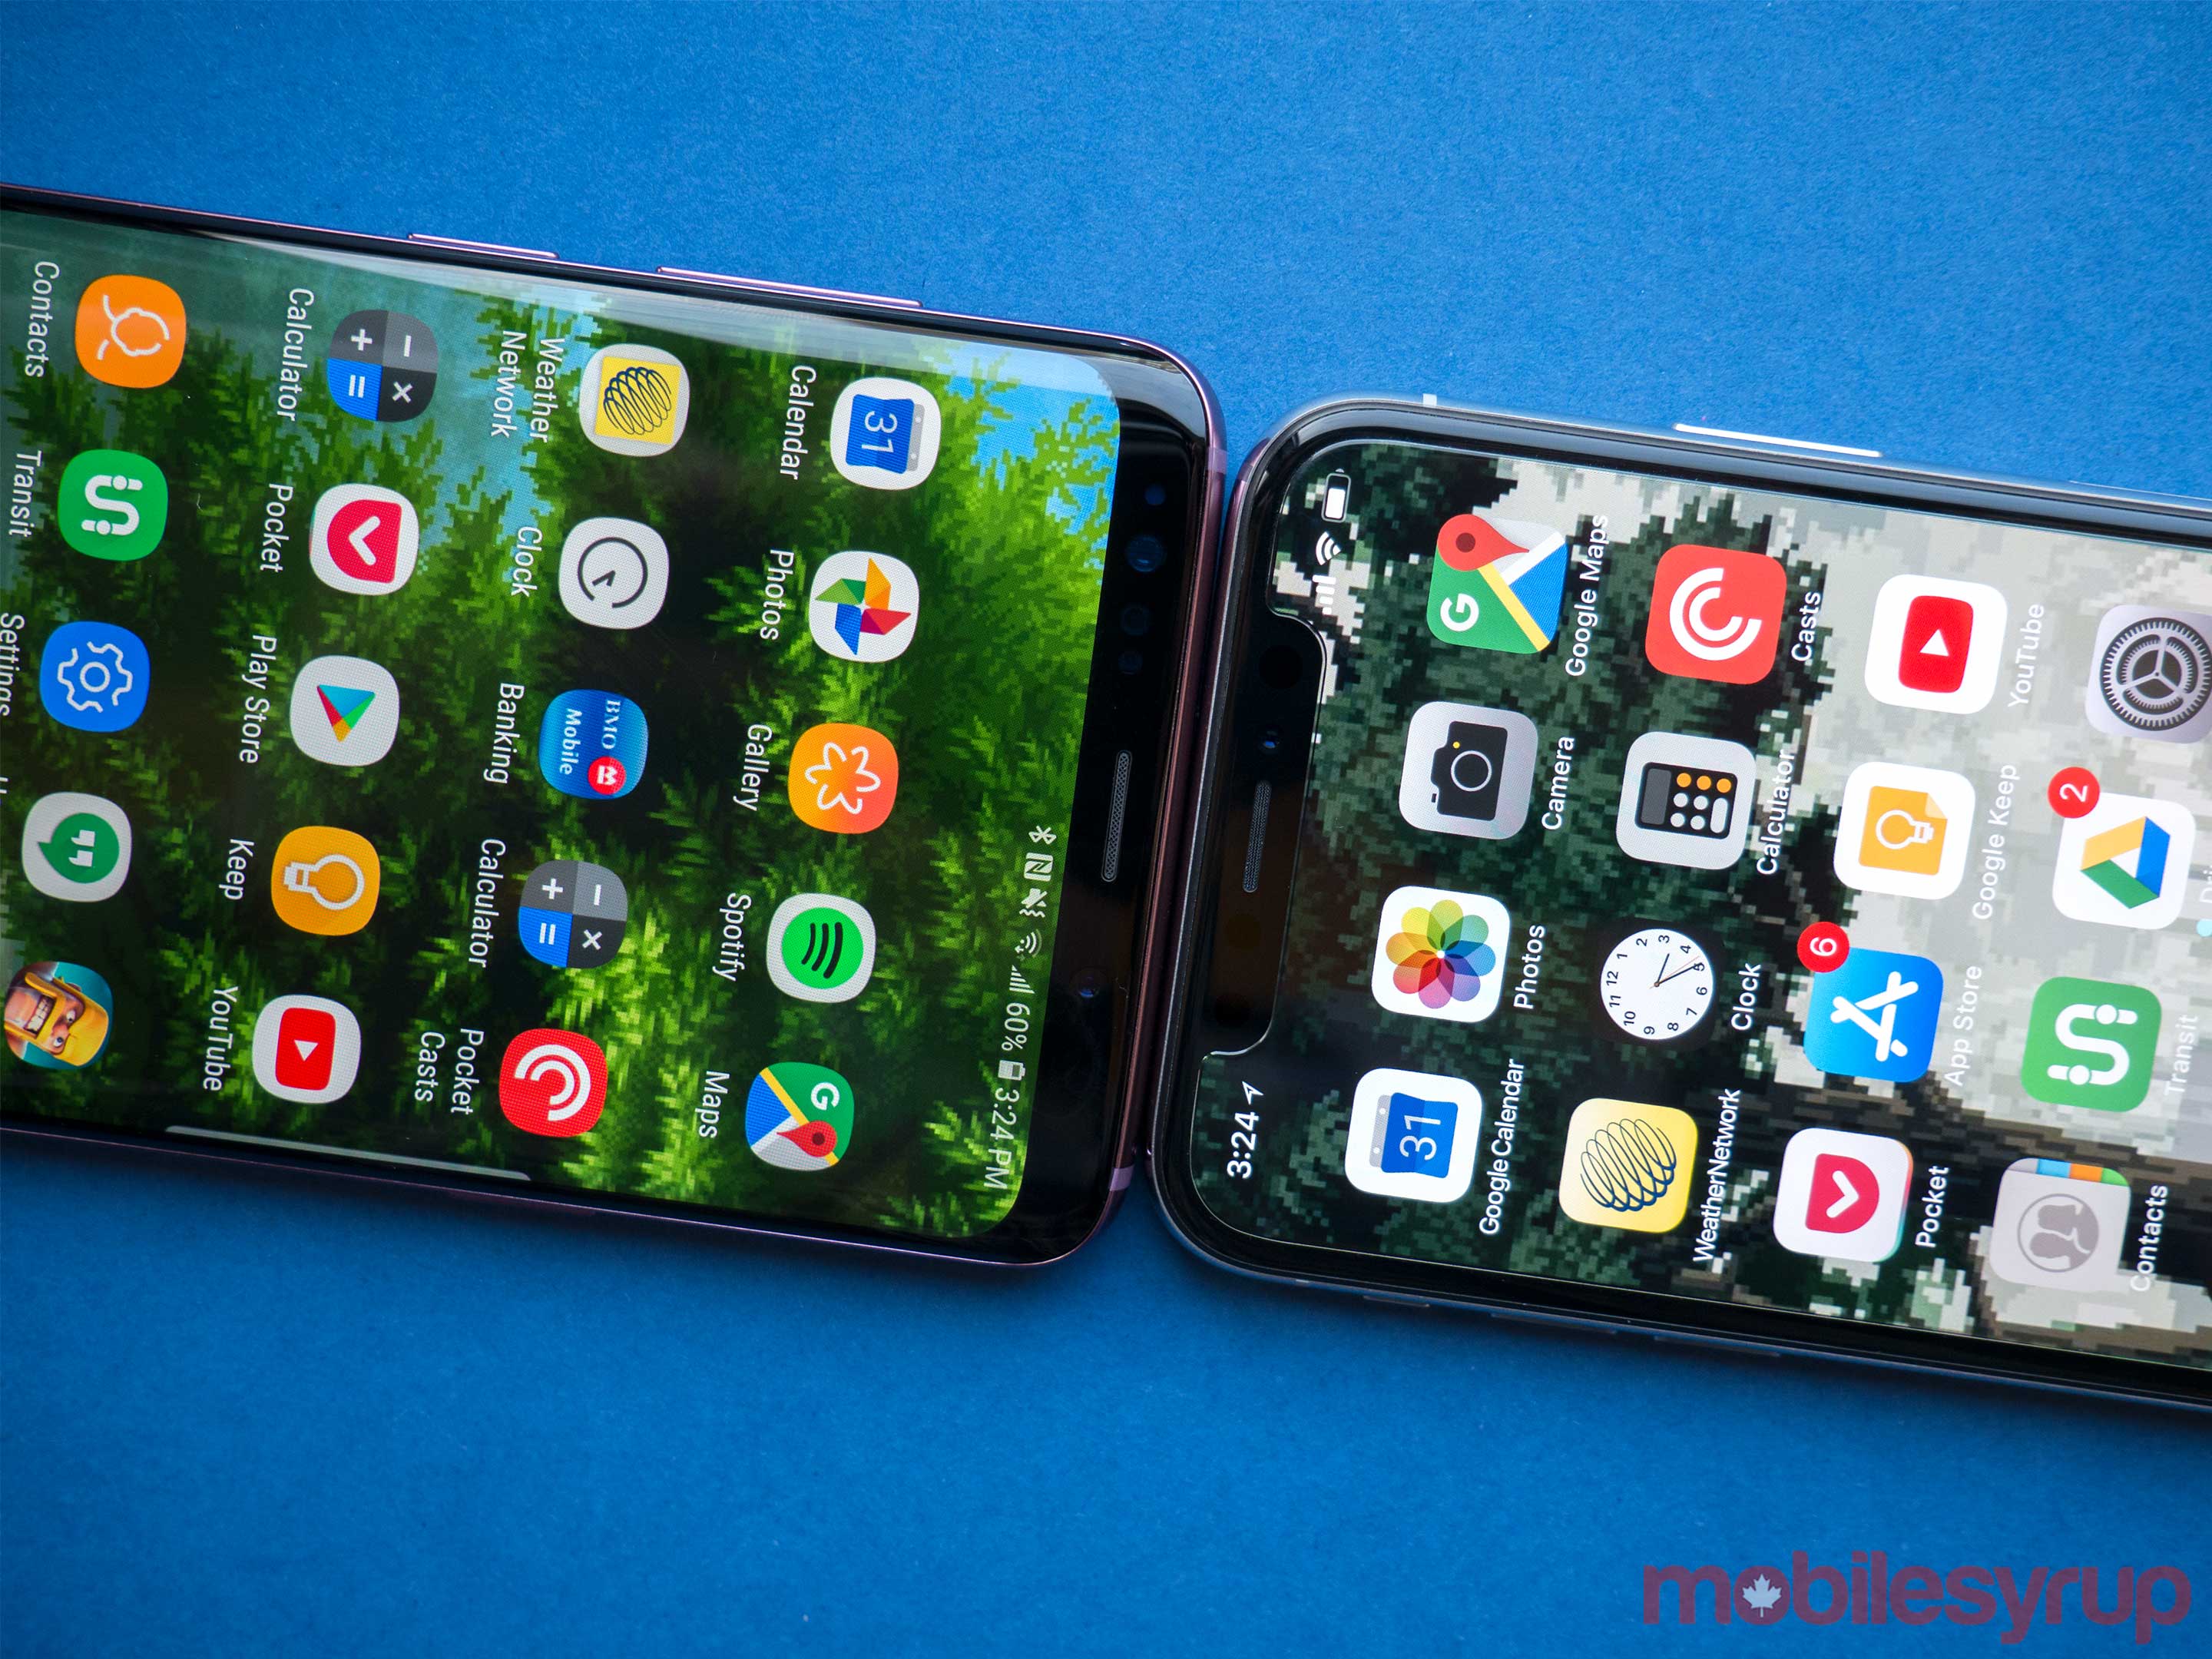 S9 vs the iPhone X